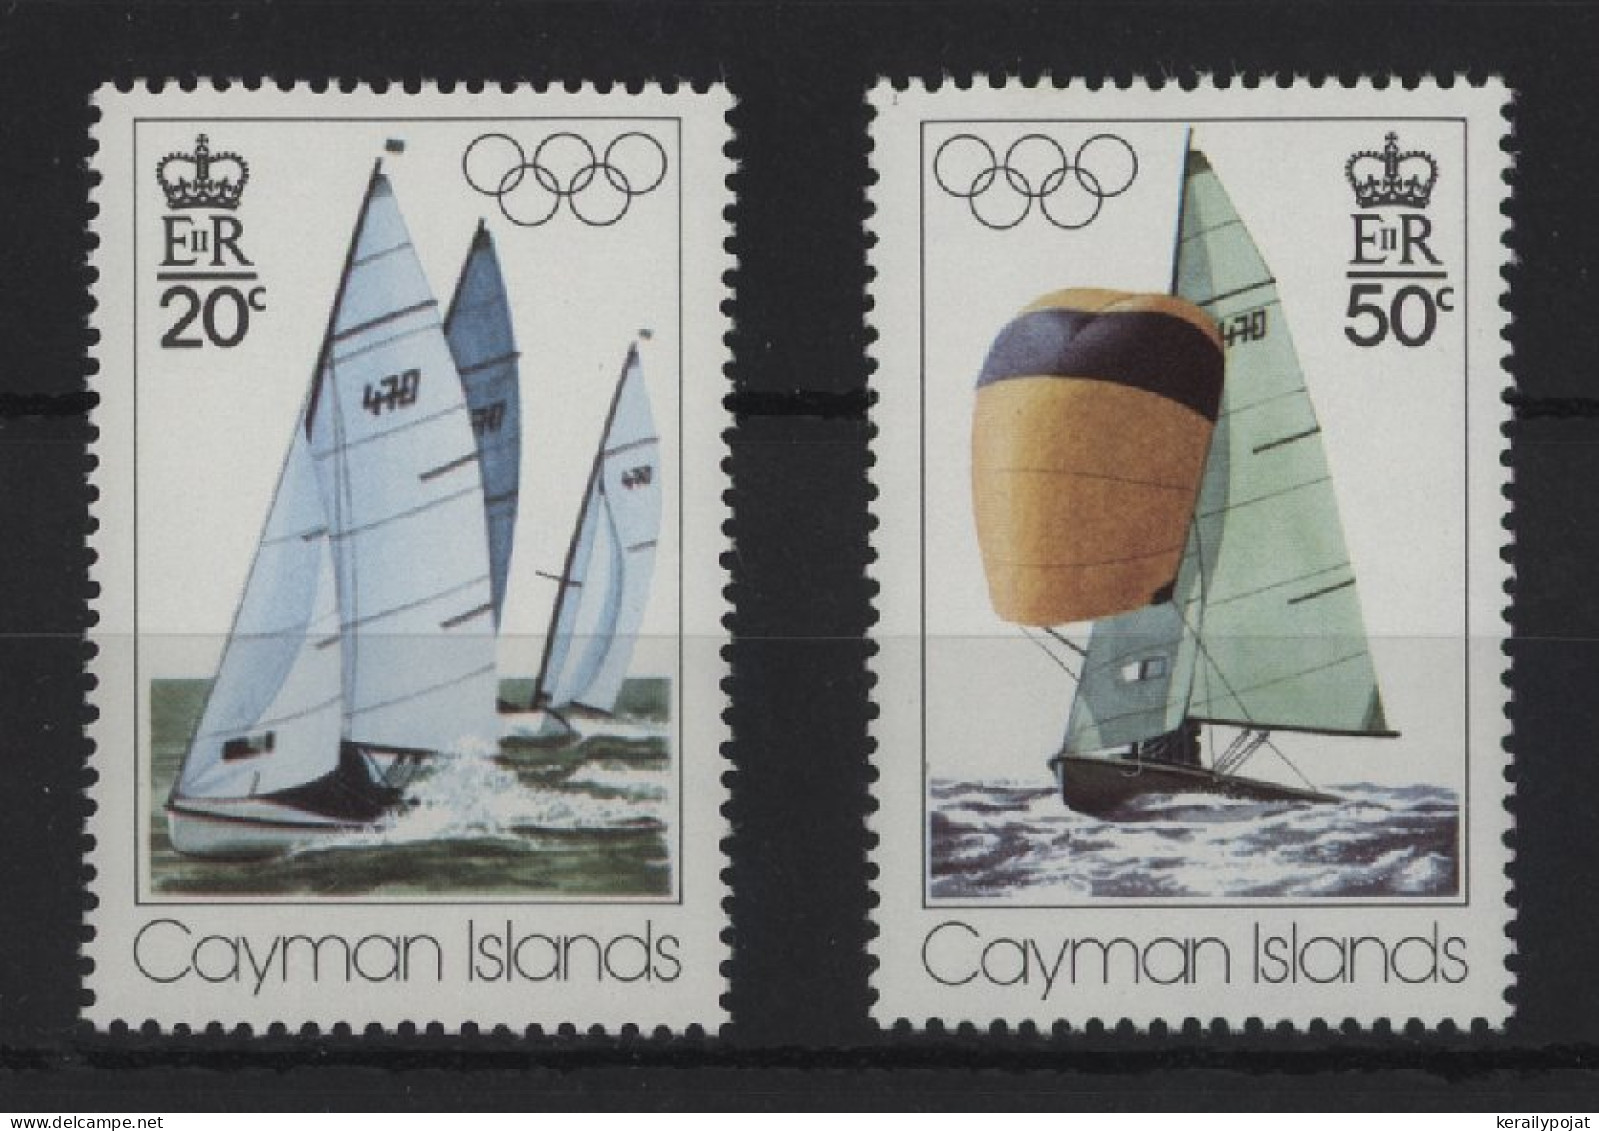 Cayman Islands - 1976 Summer Olympics Montreal MNH__(TH-24212) - Kaaiman Eilanden